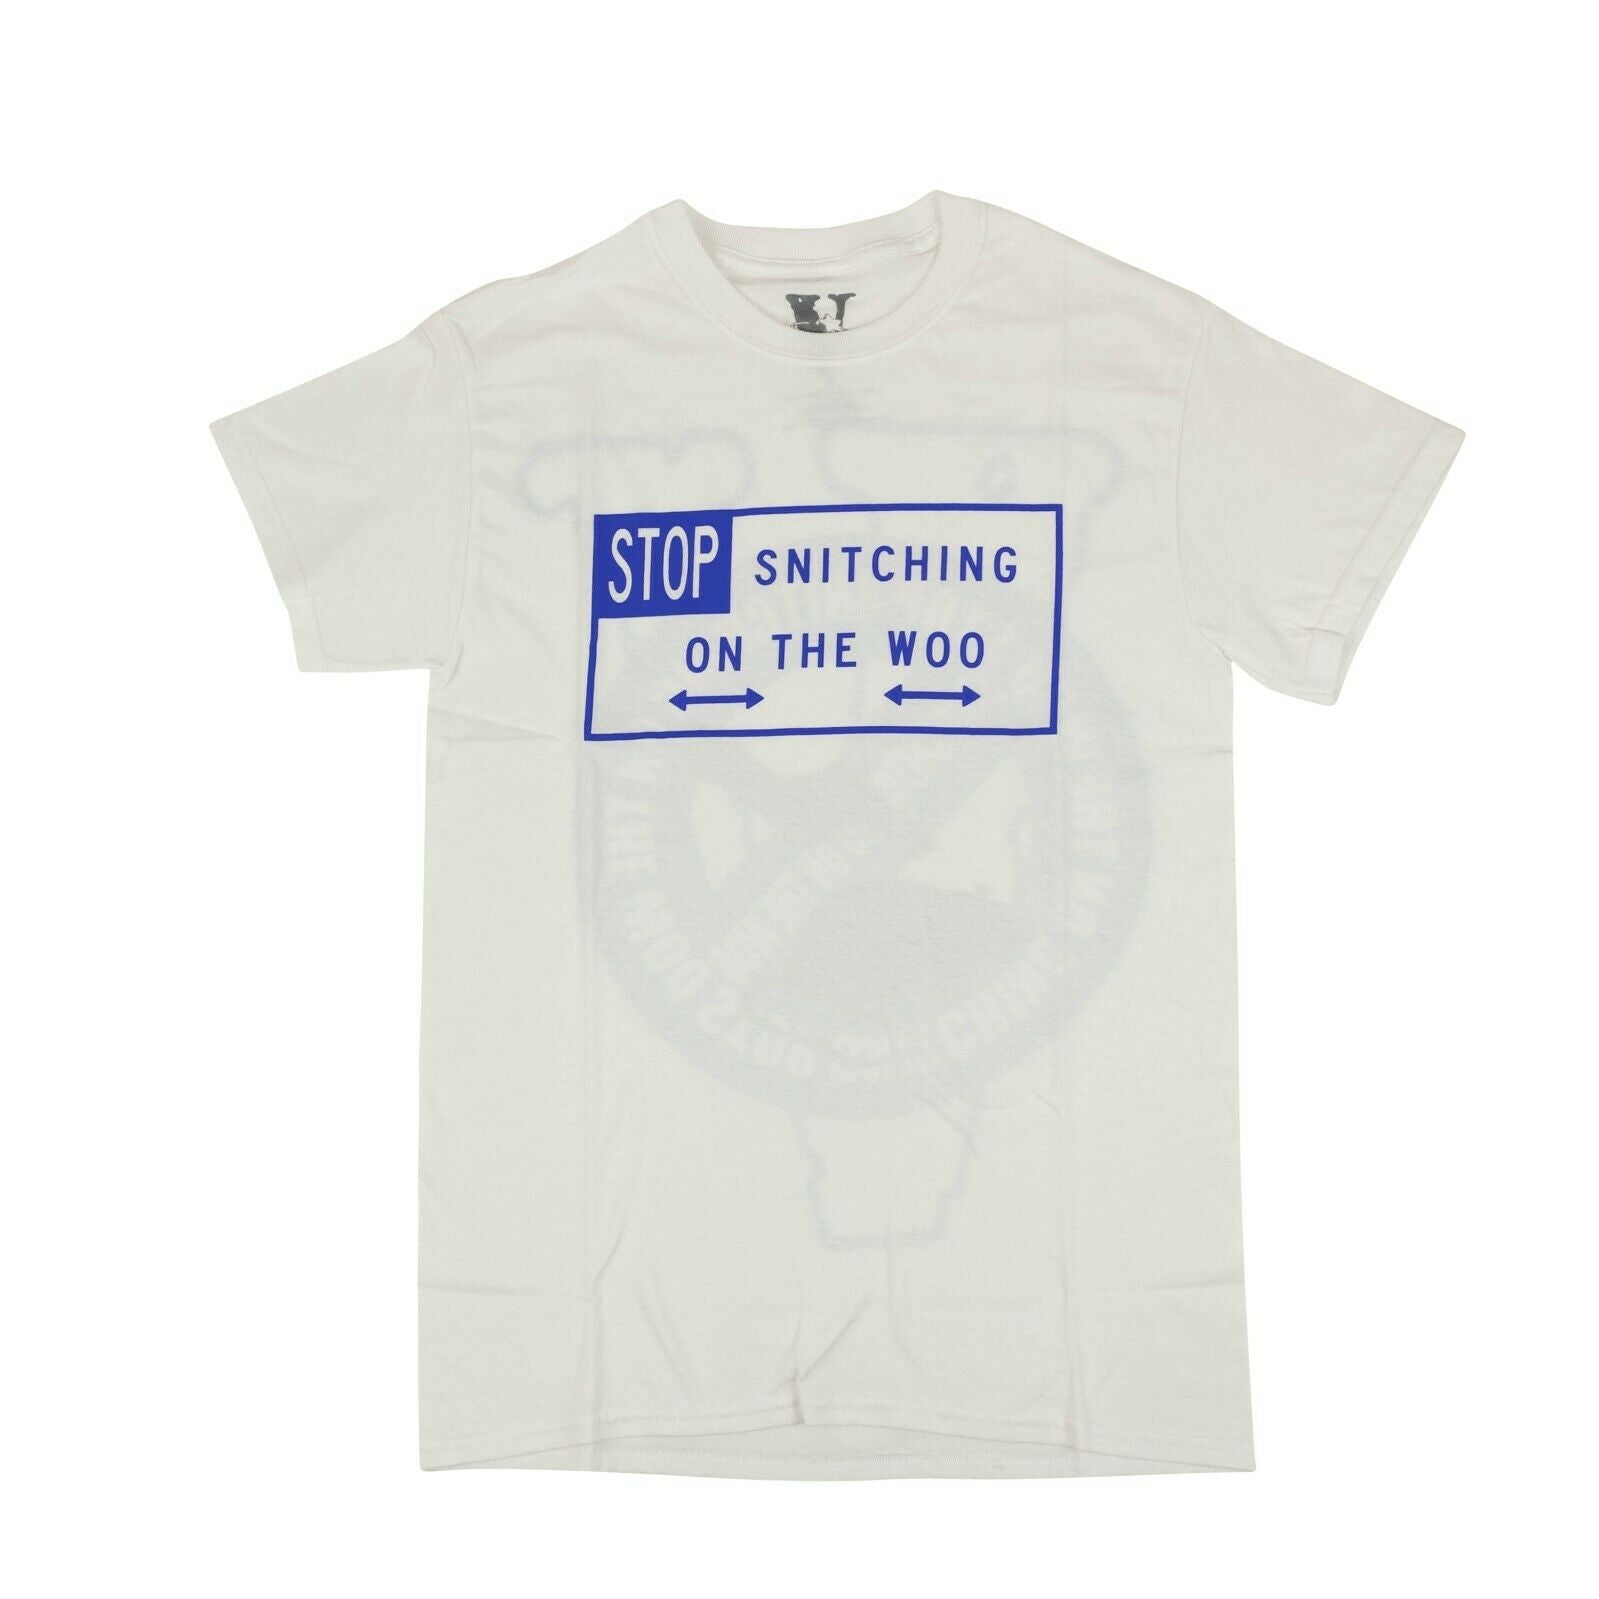 Vlone X Pop Smoke 'Stop Snitching' Short Sleeves T-Shirt - White/Blue